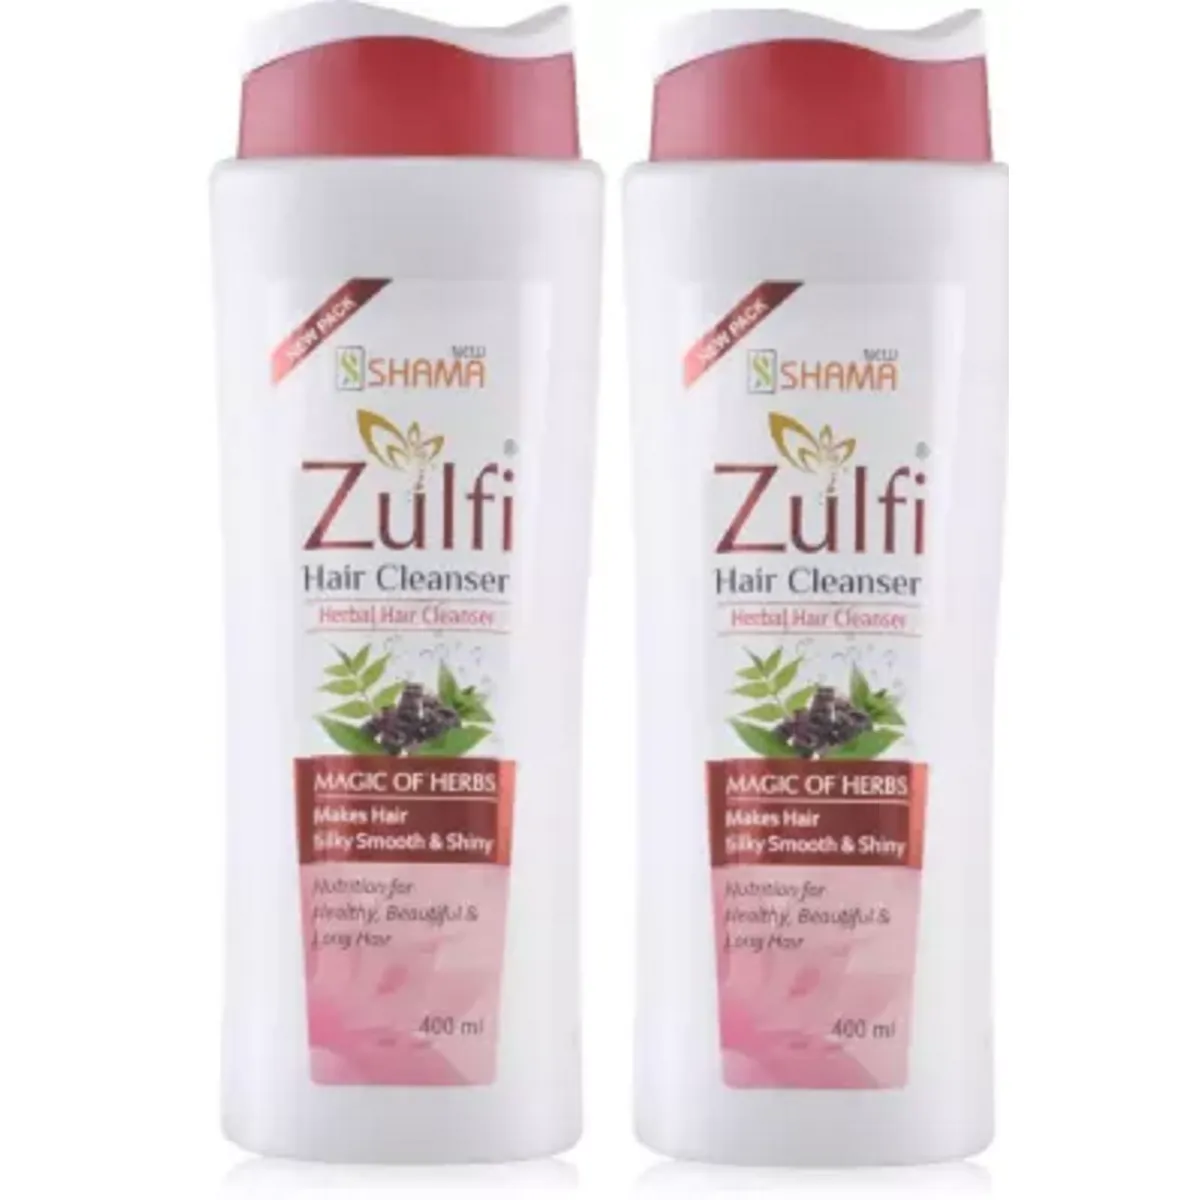 New Shama Zulfi Shampoo 400ml, Pack of 2